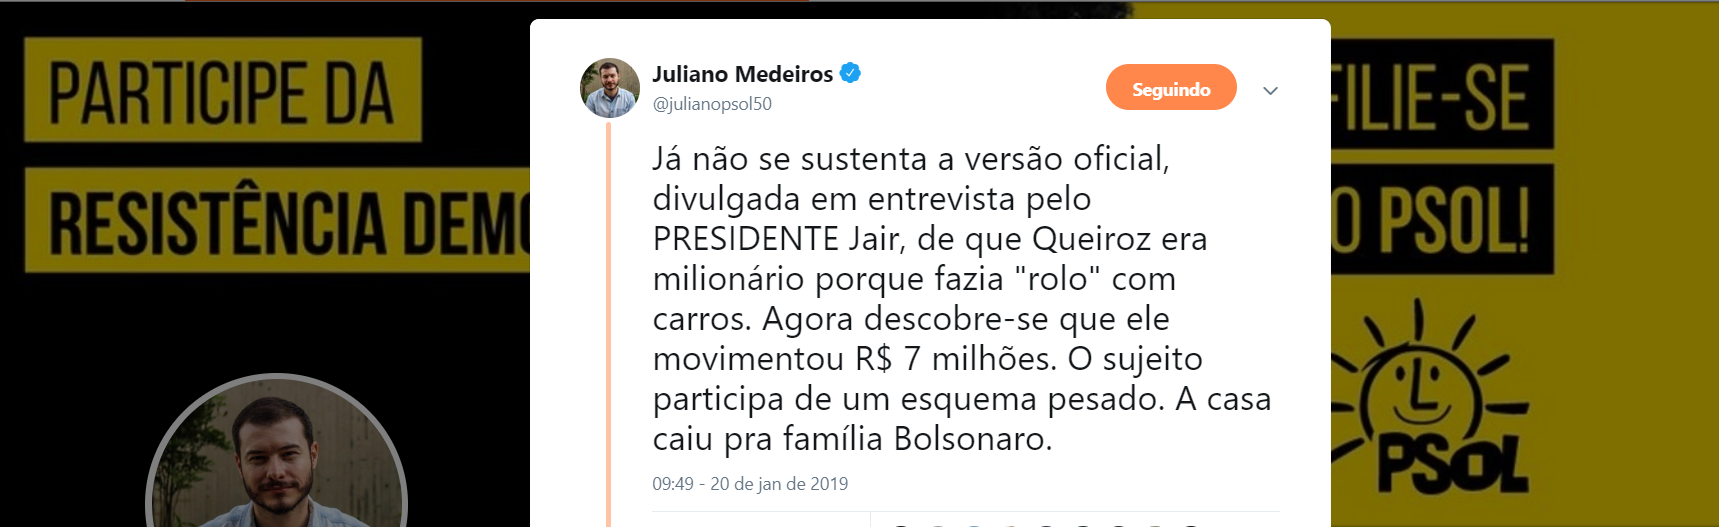 Juliano Medeiros: a casa caiu pra família Bolsonaro